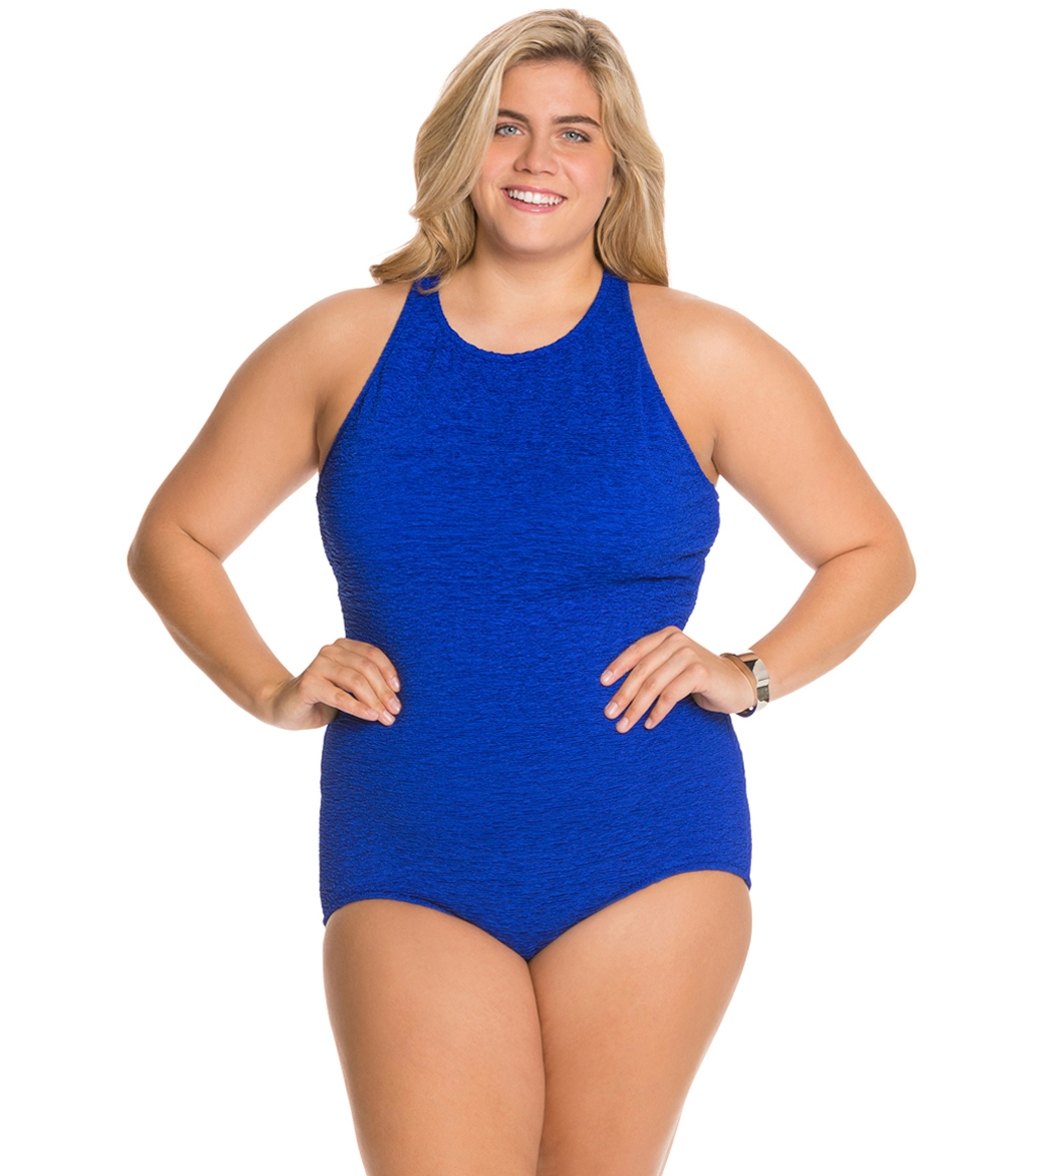 Penbrooke Krinkle Plus Size Chlorine Resistant High Neck One Piece Swimsuit - Royal 22W - Swimoutlet.com